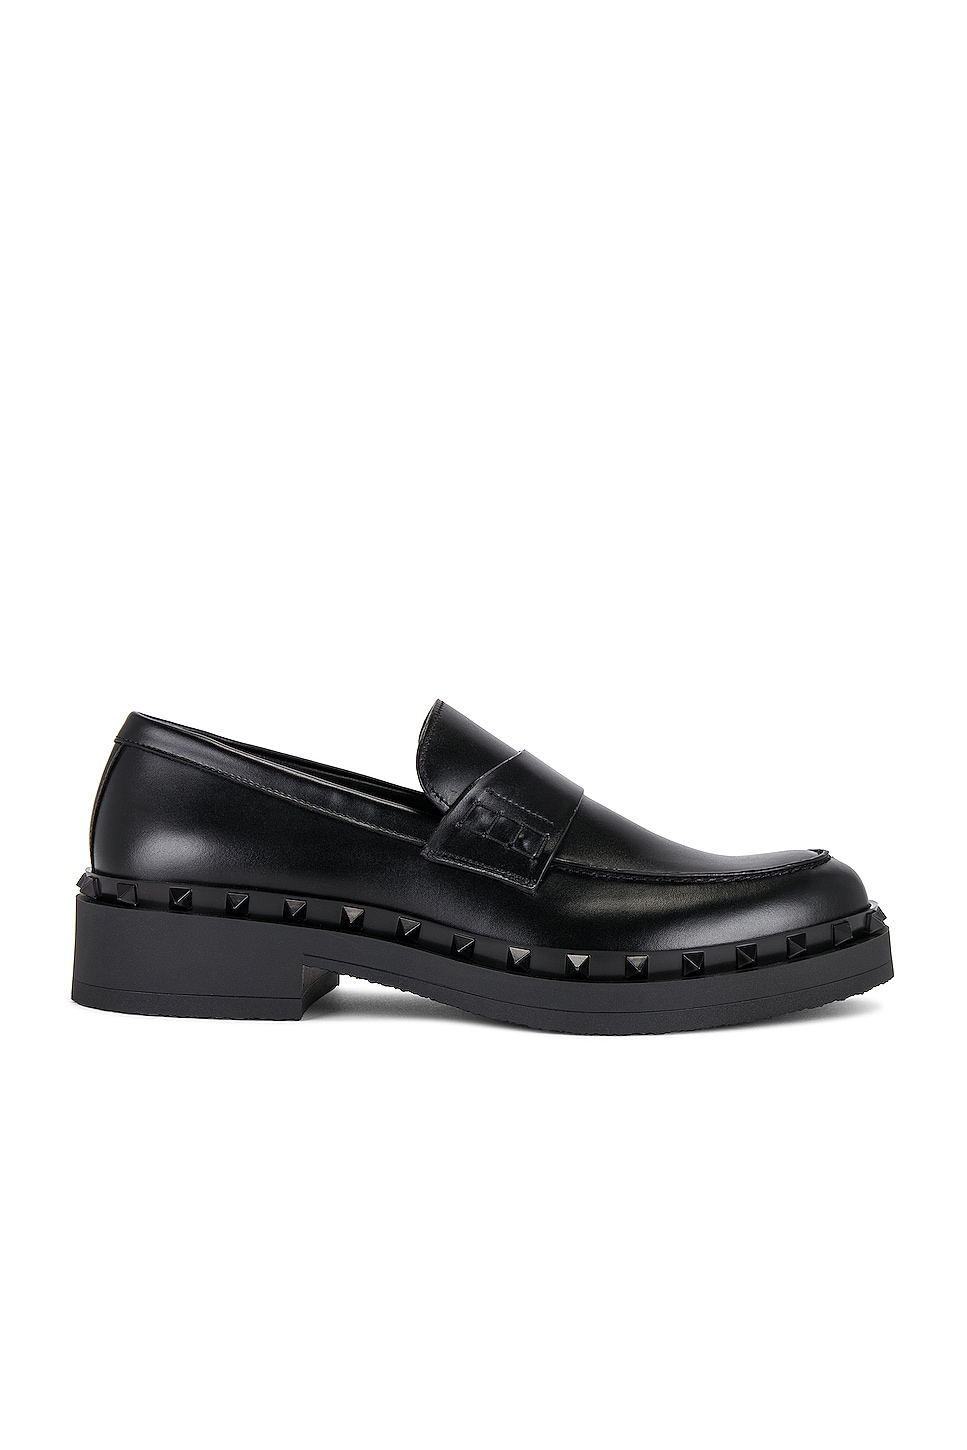 Image 1 of Valentino Garavani Rockstud Loafer in Black